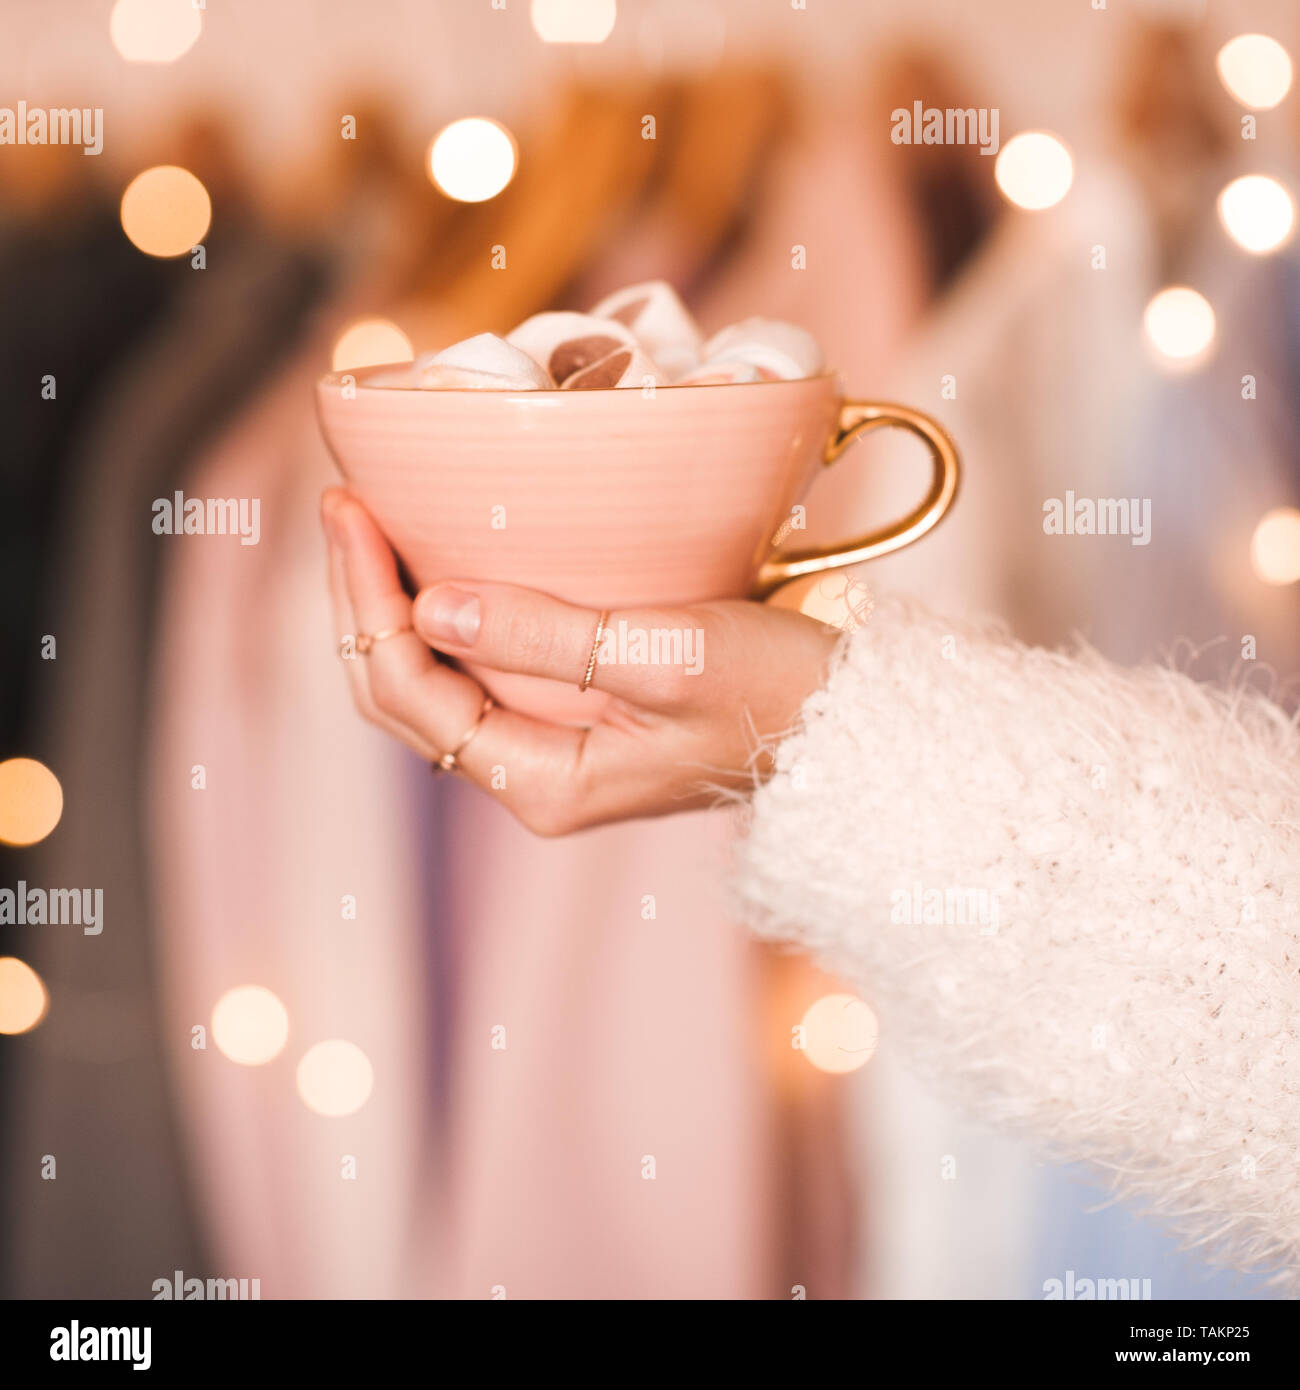 Girl holding cup of coffee over Christmas lights closeup. Good morning. Stock Photo